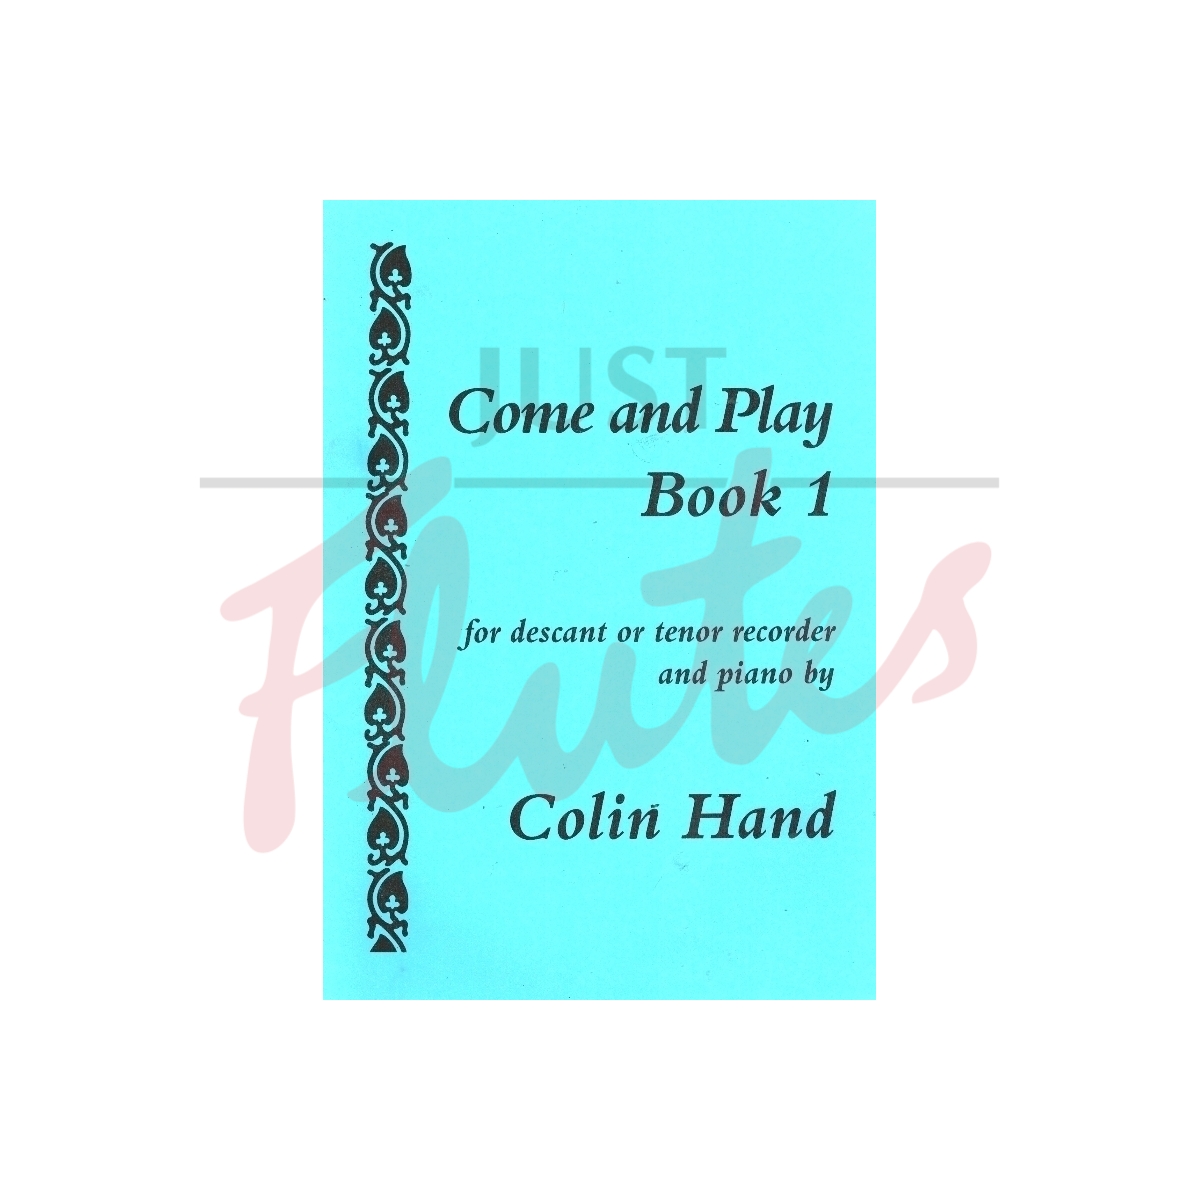 Come and Play Book 1 [Descant/Tenor Recorder]